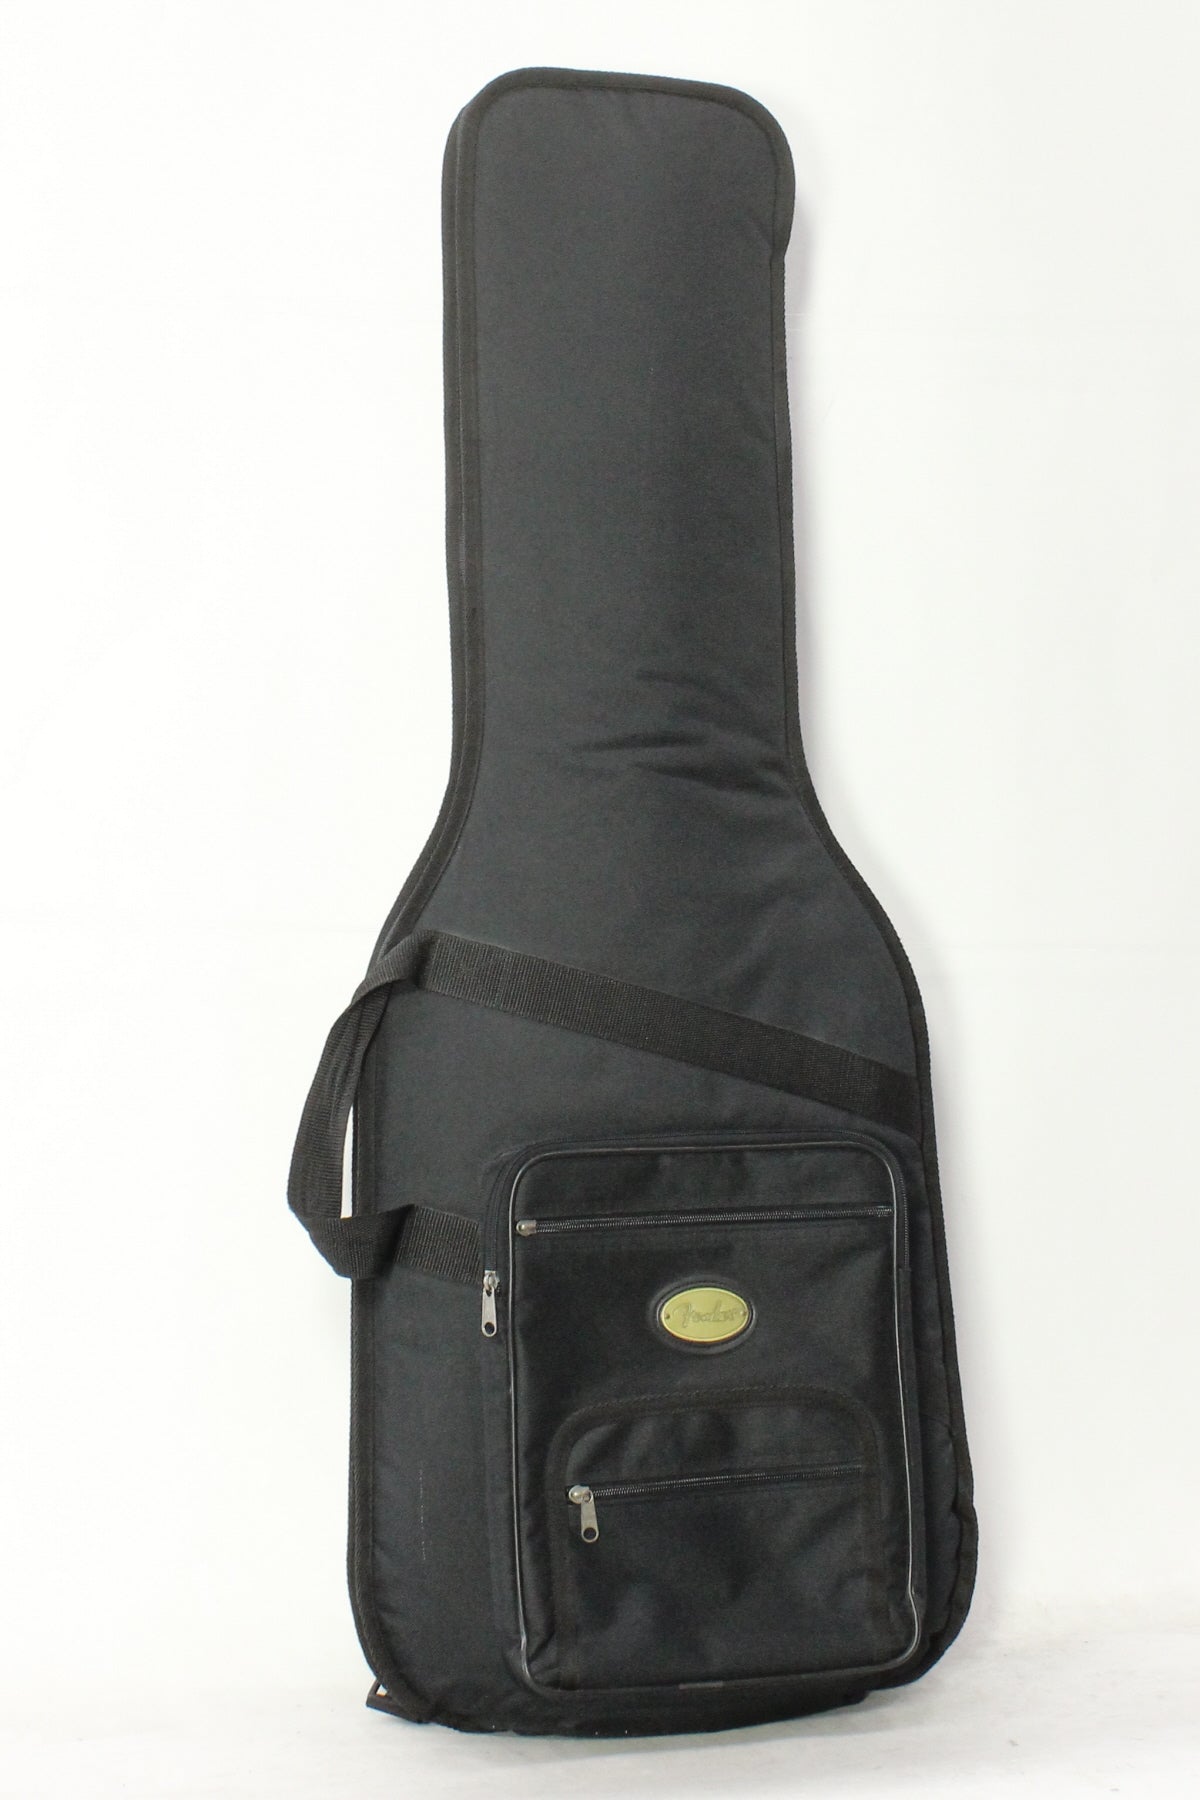 [SN MZ2121325] USED Fender Mexico / Classic 72 Telecaster Custom Black [03]